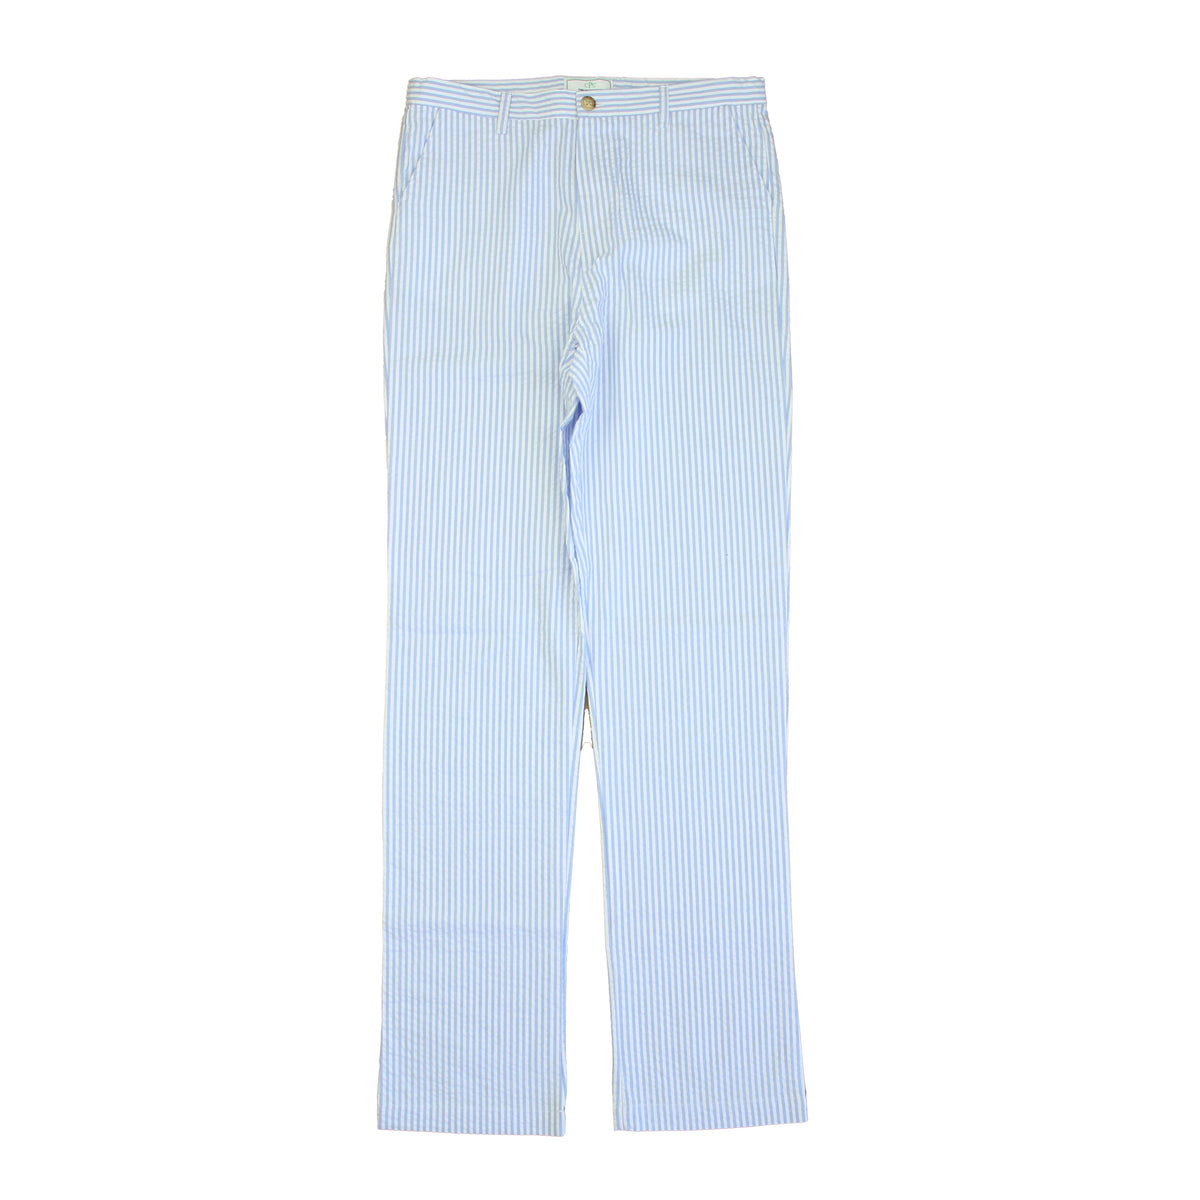 New with Tags: Blue Seersucker Pants -- FINAL SALE